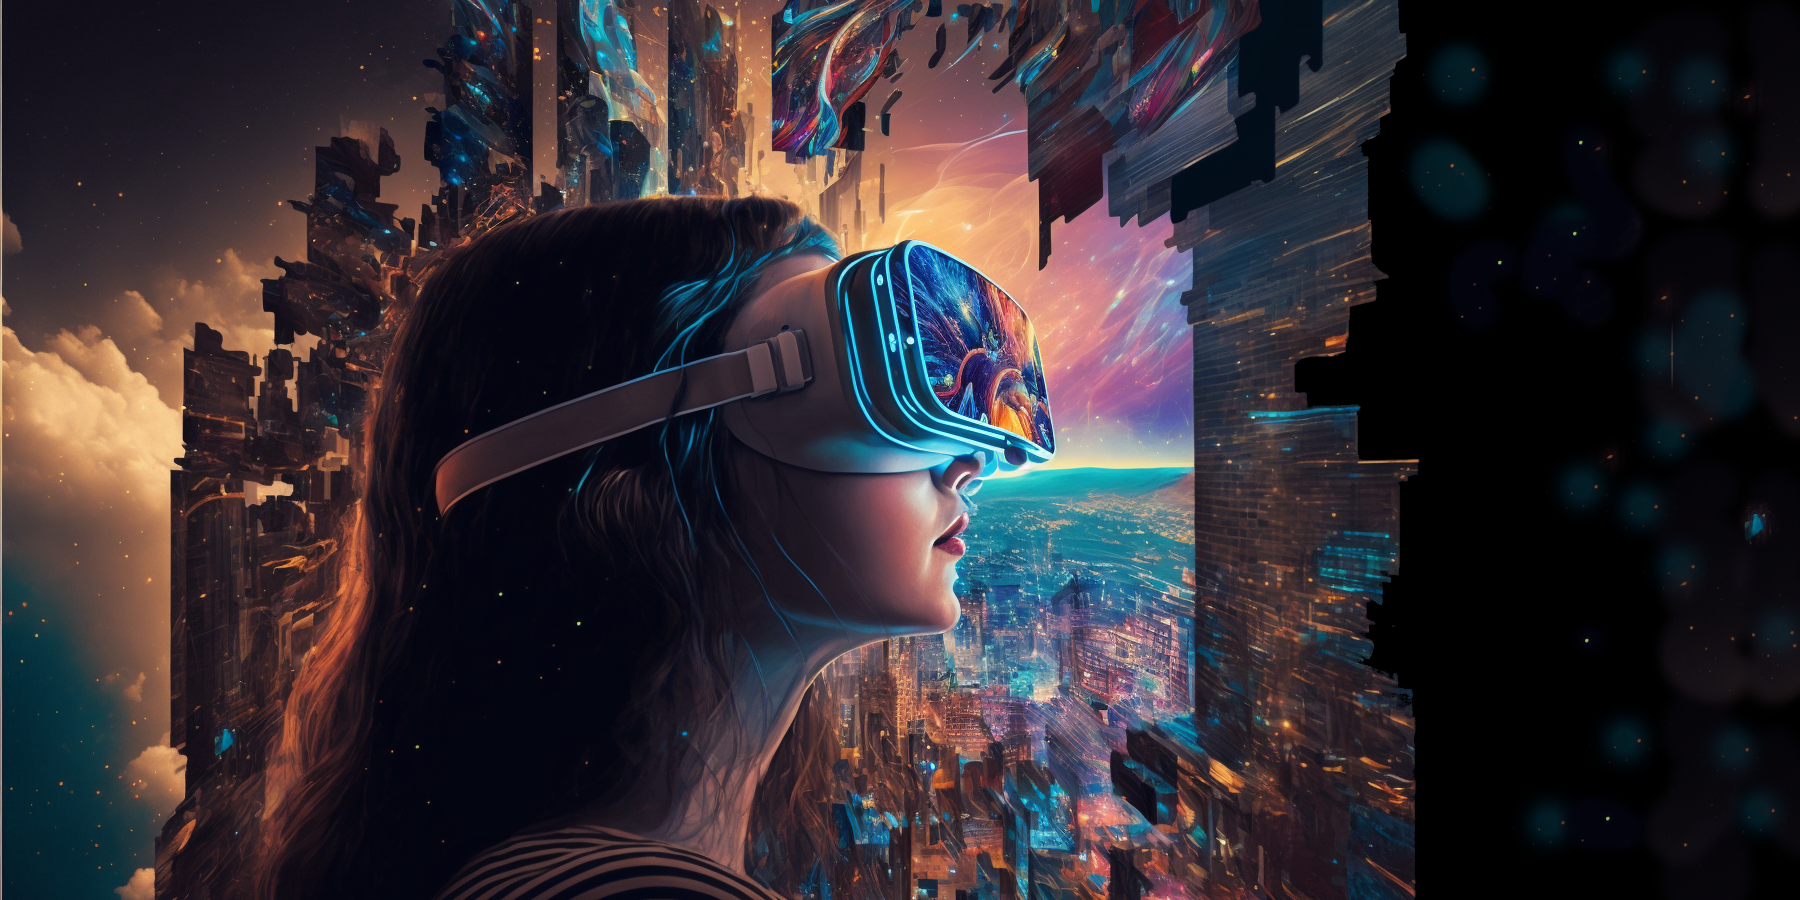 Metaverse- Is Virtual World the Future of the Internet? - CronJ